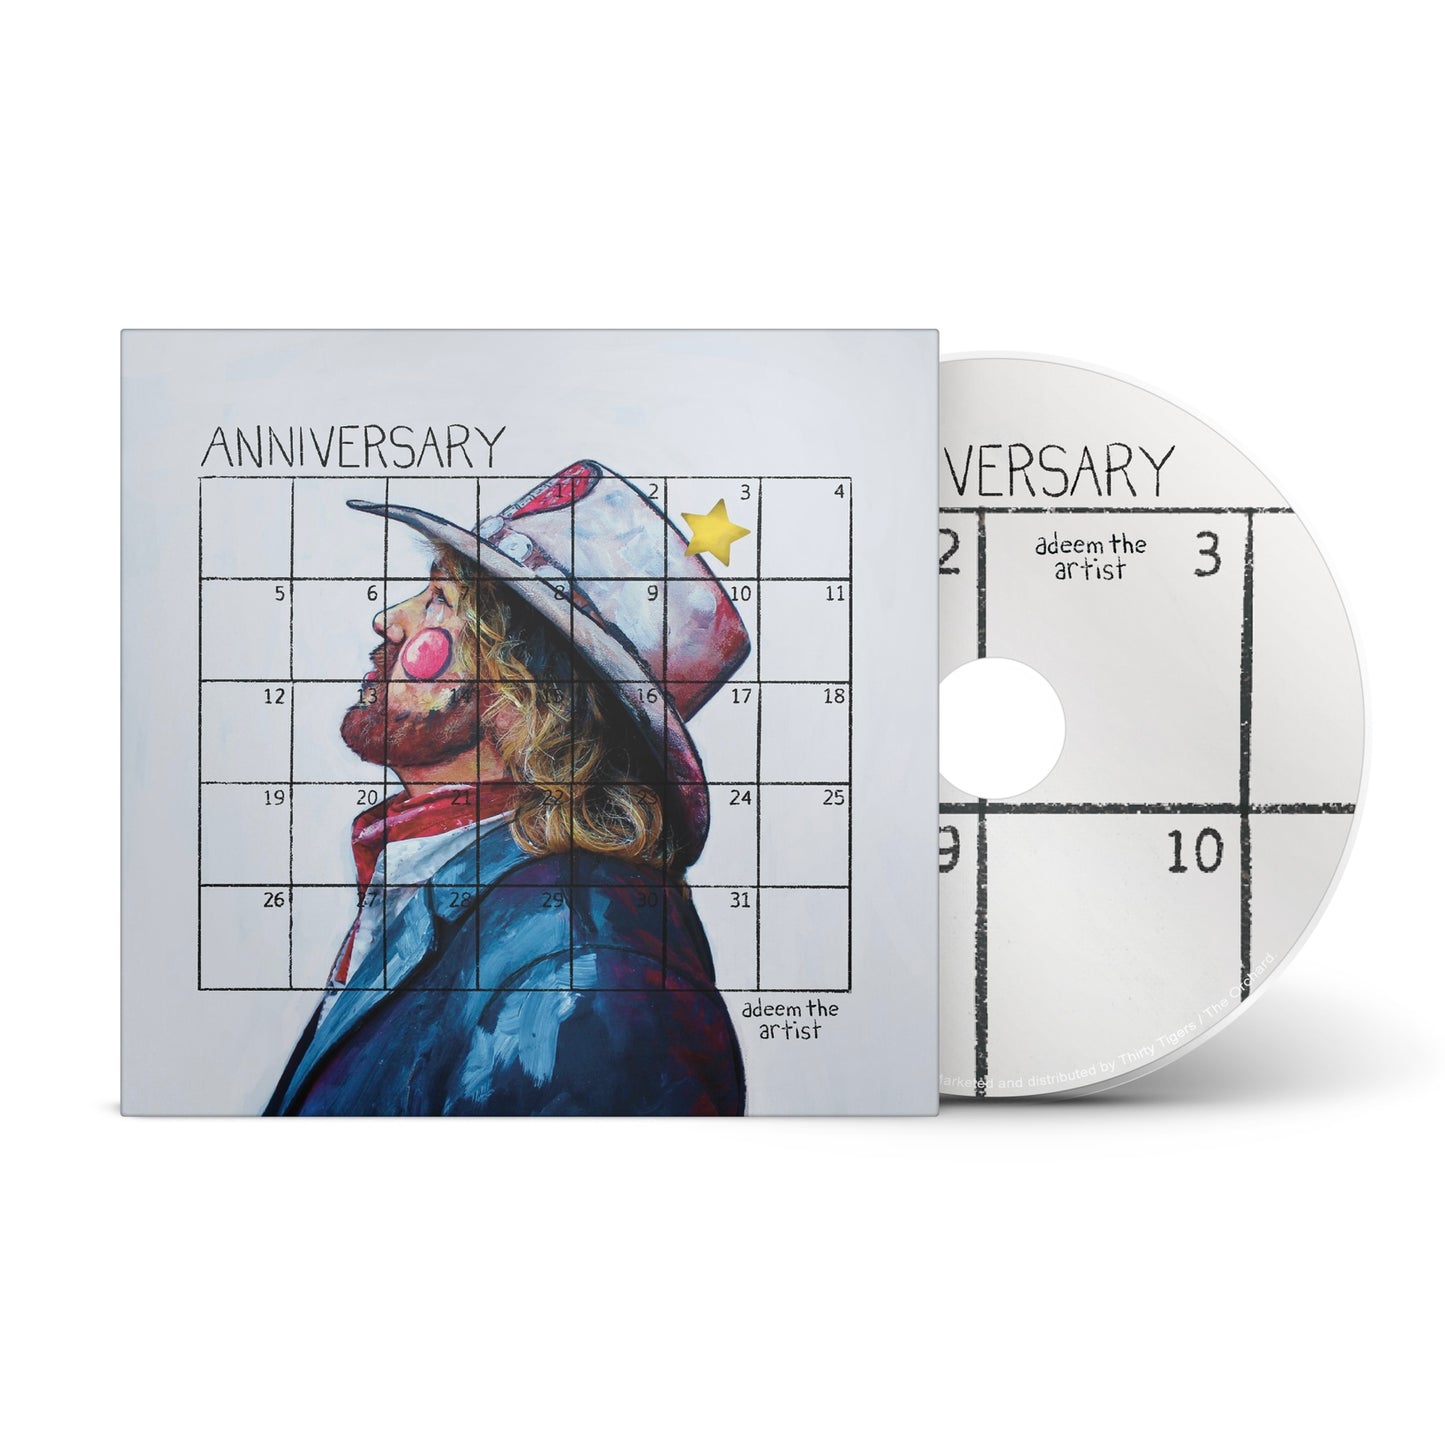 (Pre-order!) ANNIVERSARY Compact Disc